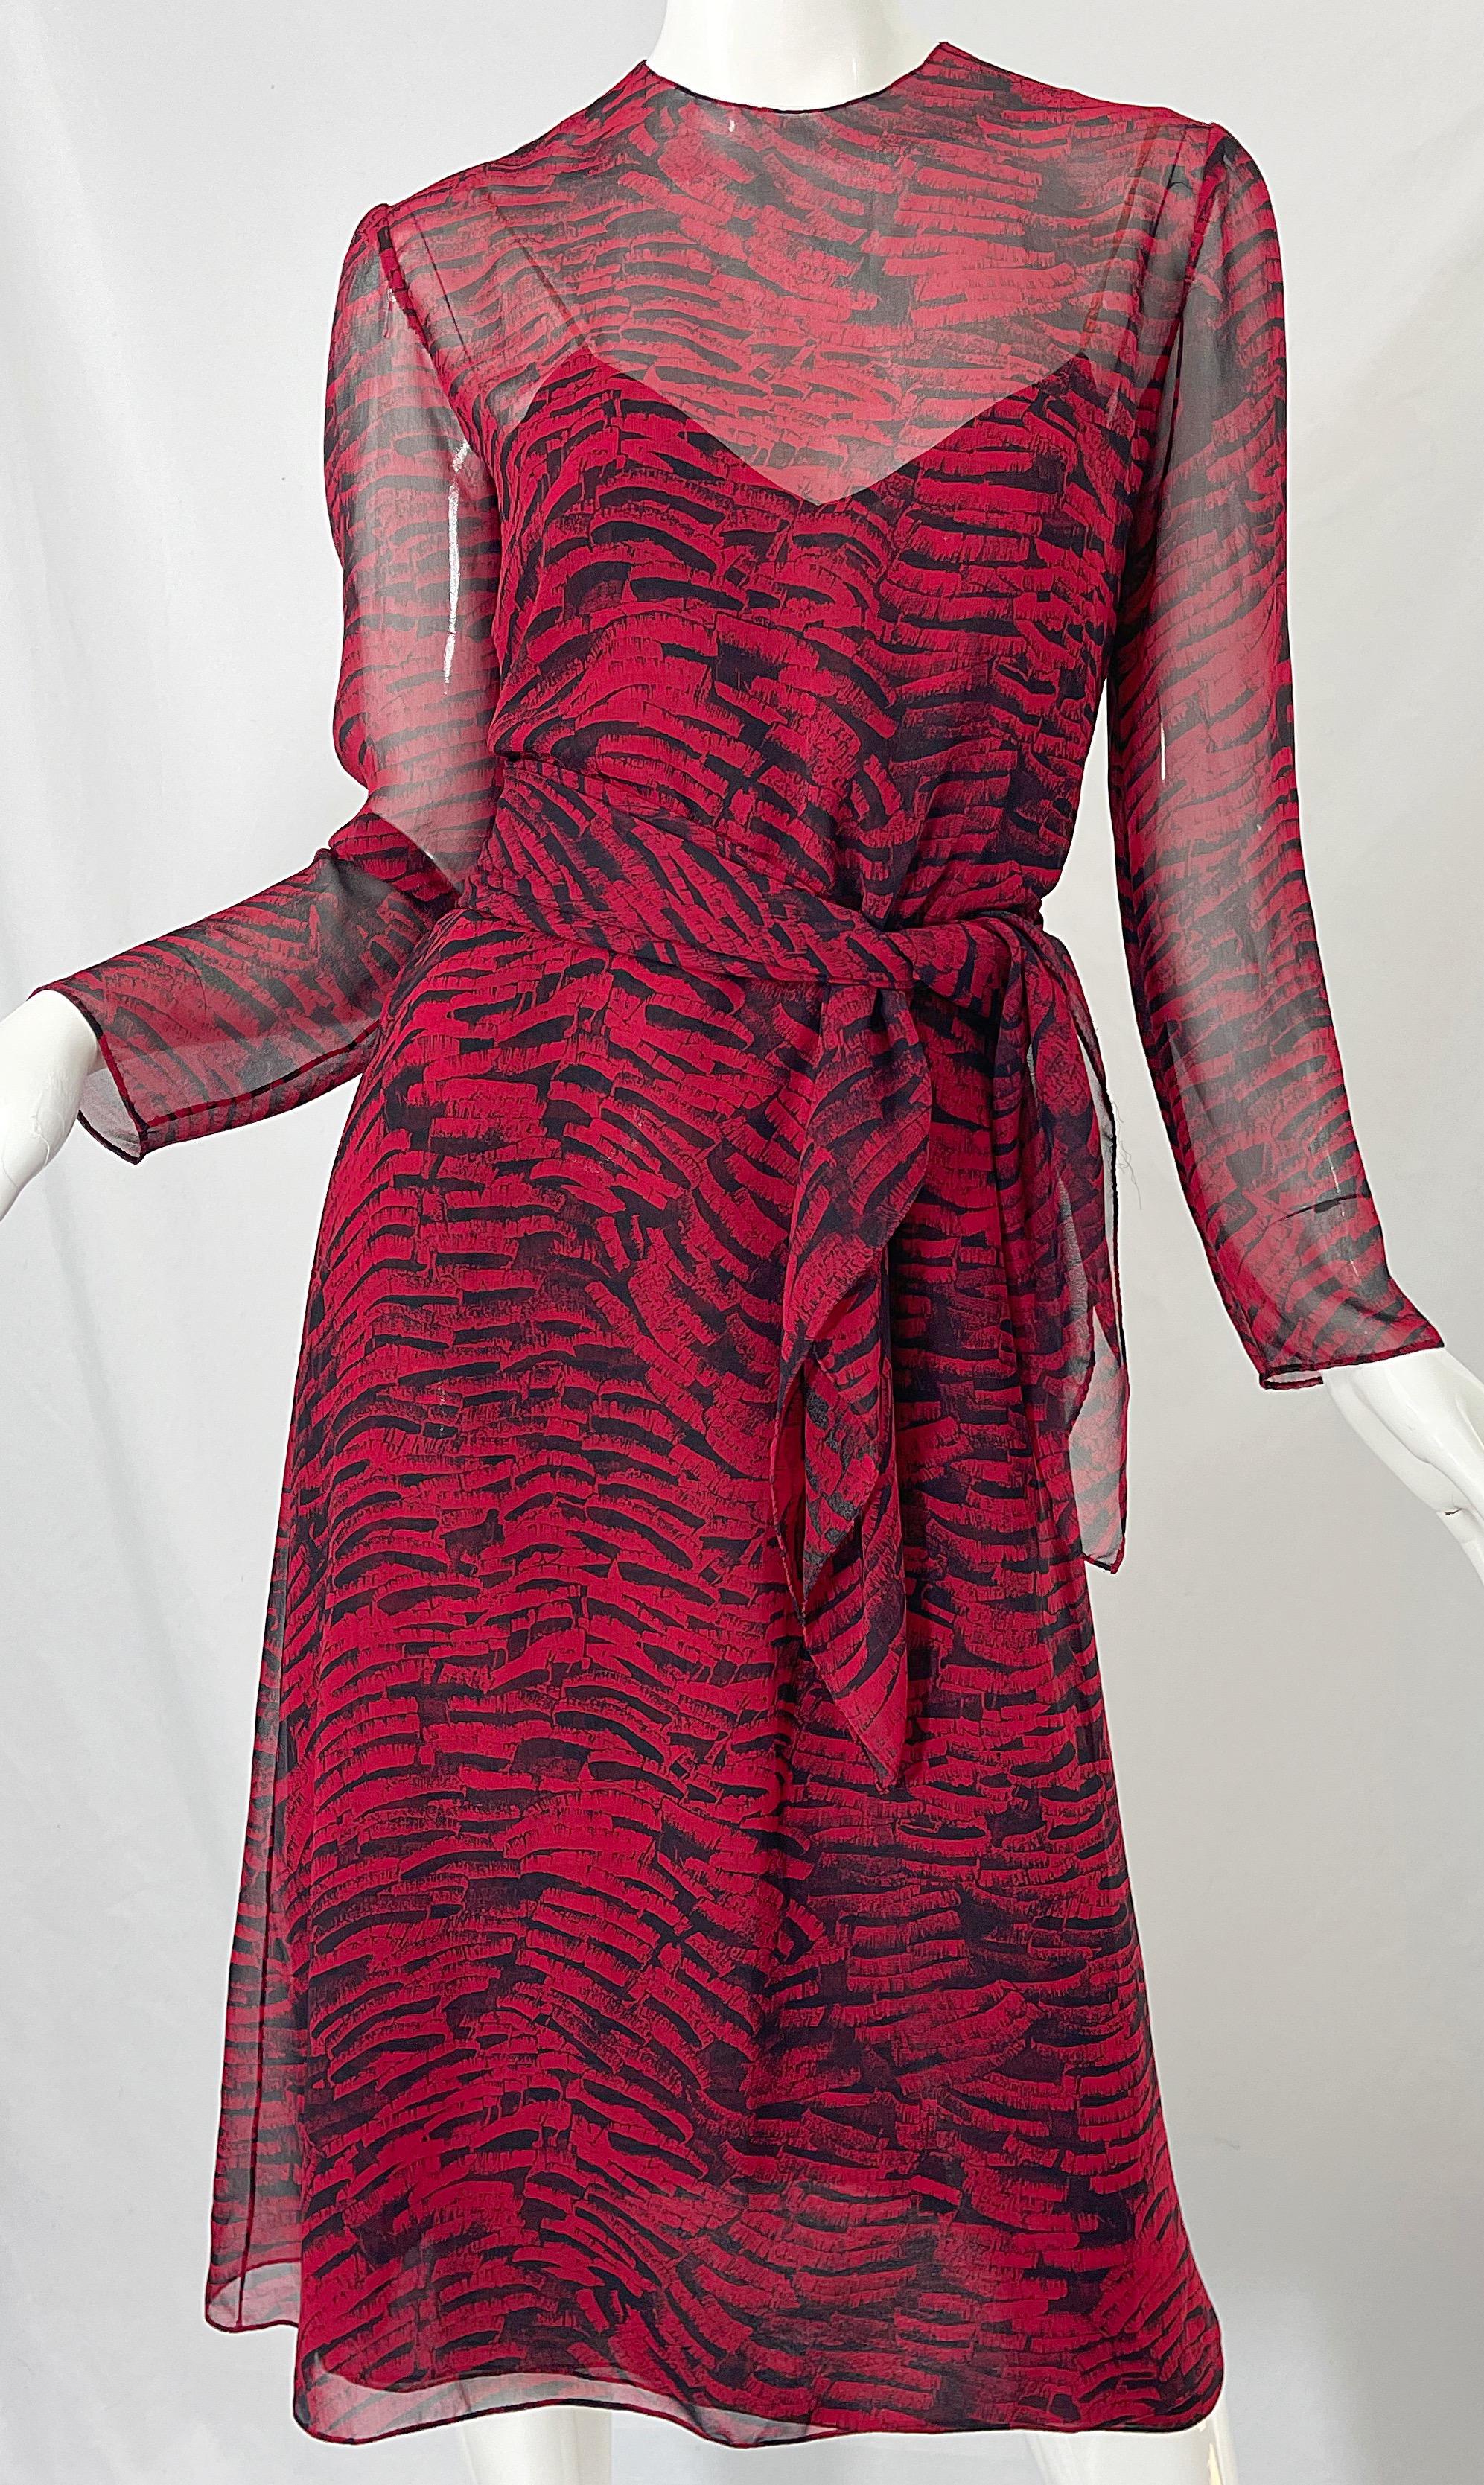 Women's 1970s Halston Red + Black Abstract Animal Print Three Piece 70s Dress Ensemble For Sale